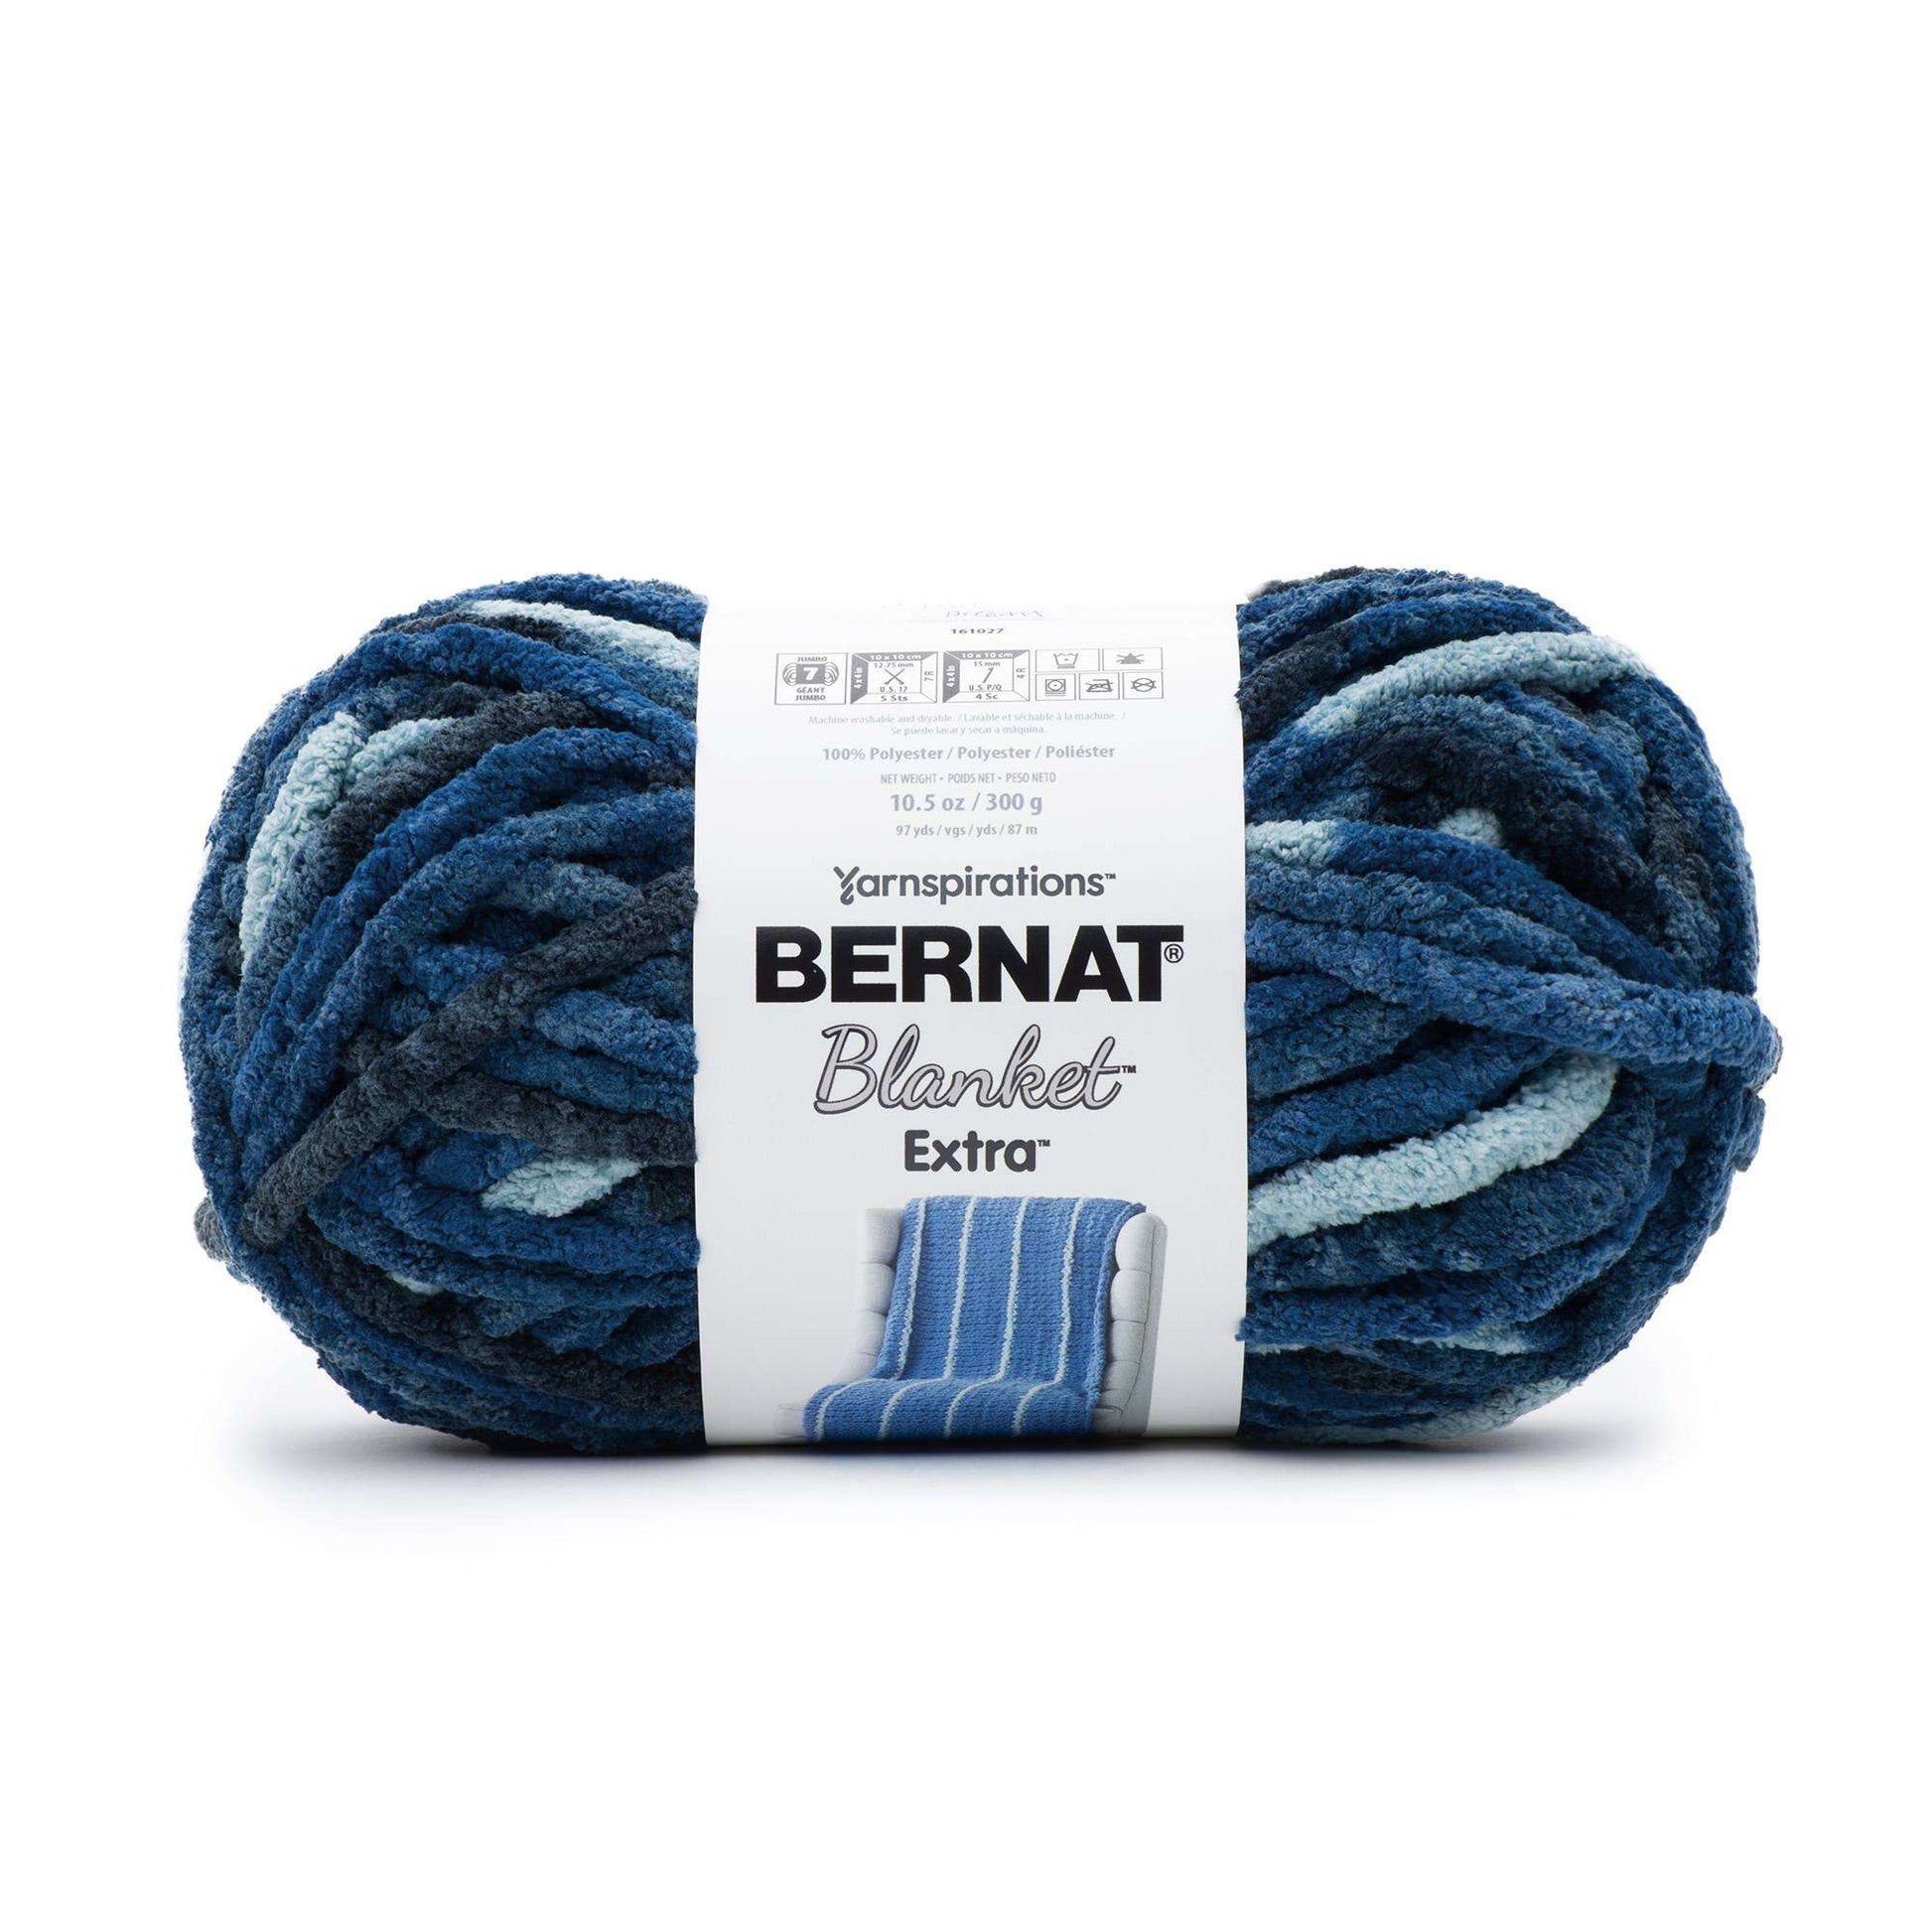 Bernat Blanket Extra Yarn (300g/10.5oz) - Clearance Shades* Teal Dreams